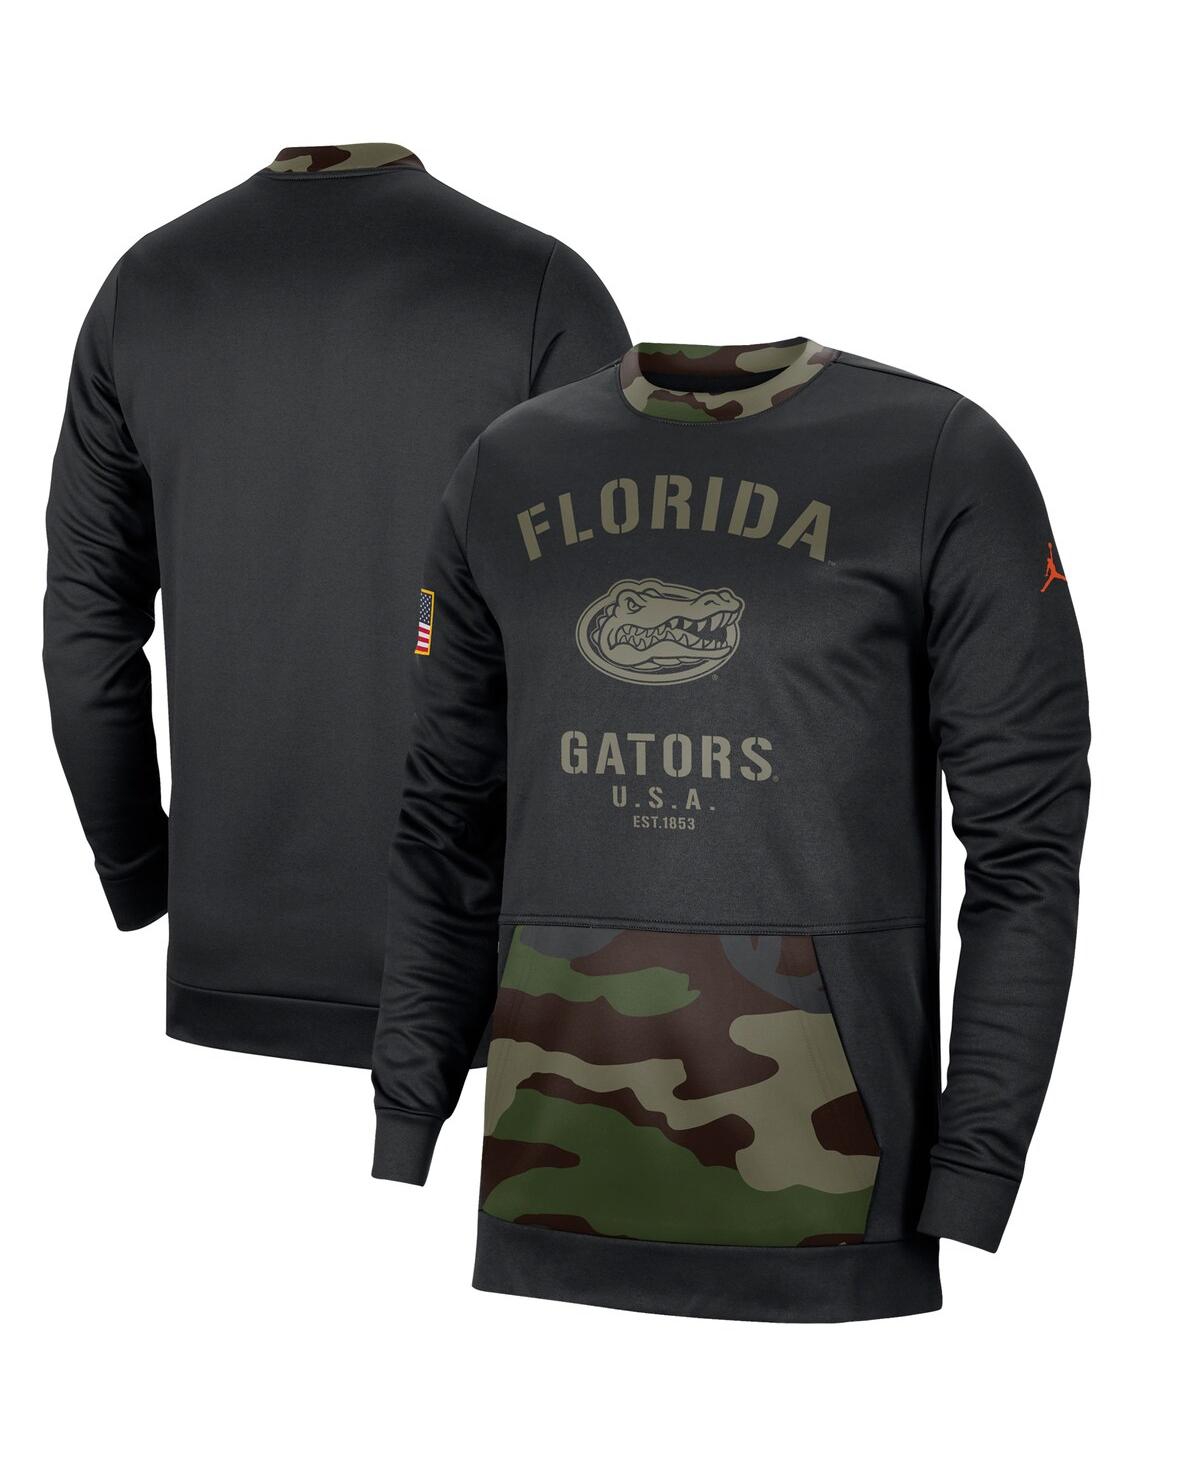 Jordan Men's Black, Camo Florida Gators Military-inspired Appreciation Performance Pullover Sweatshirt In Black,camo